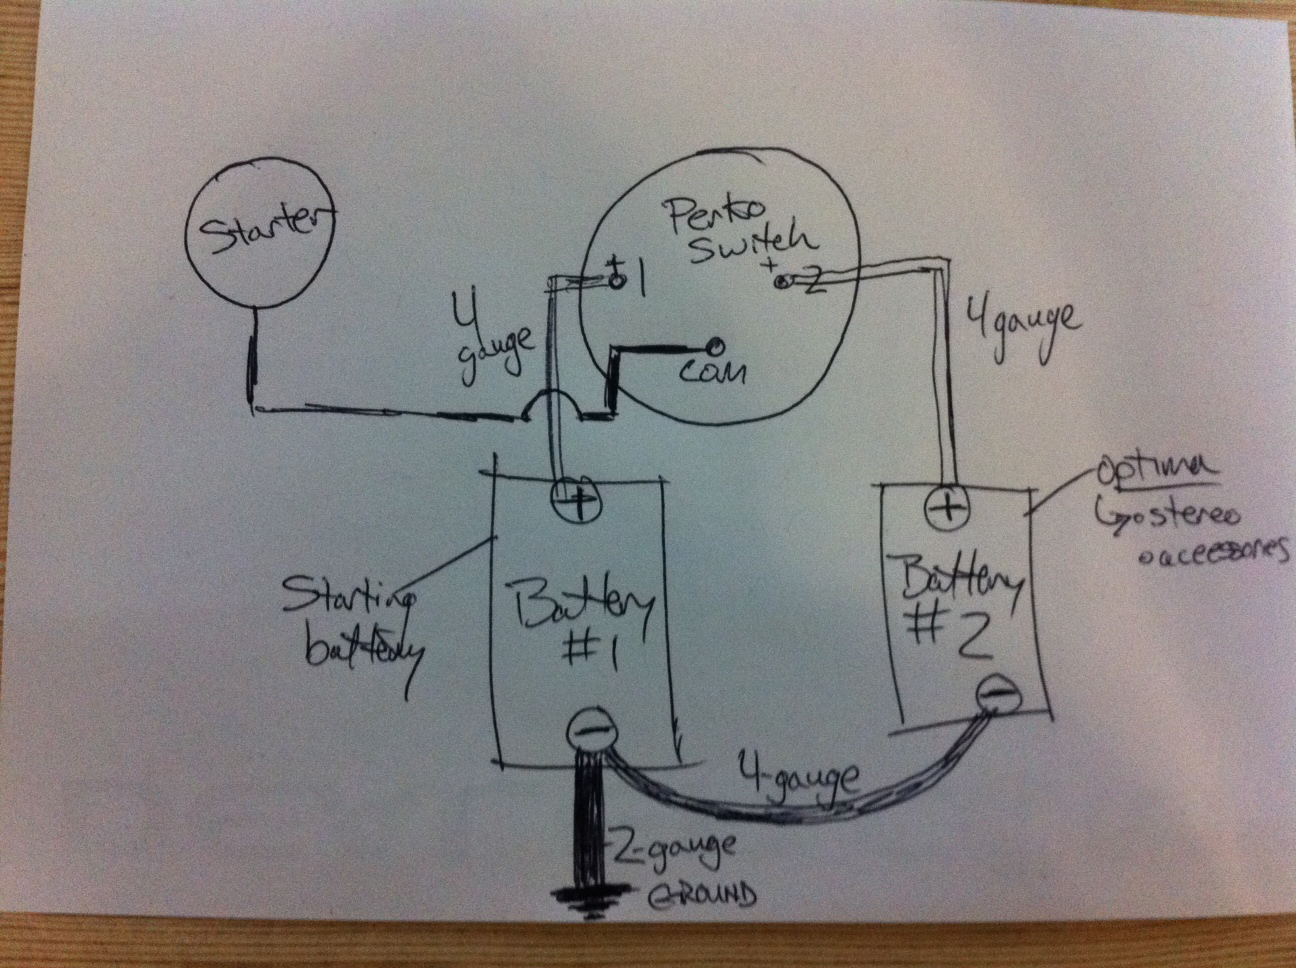 Perko battery switch diagram